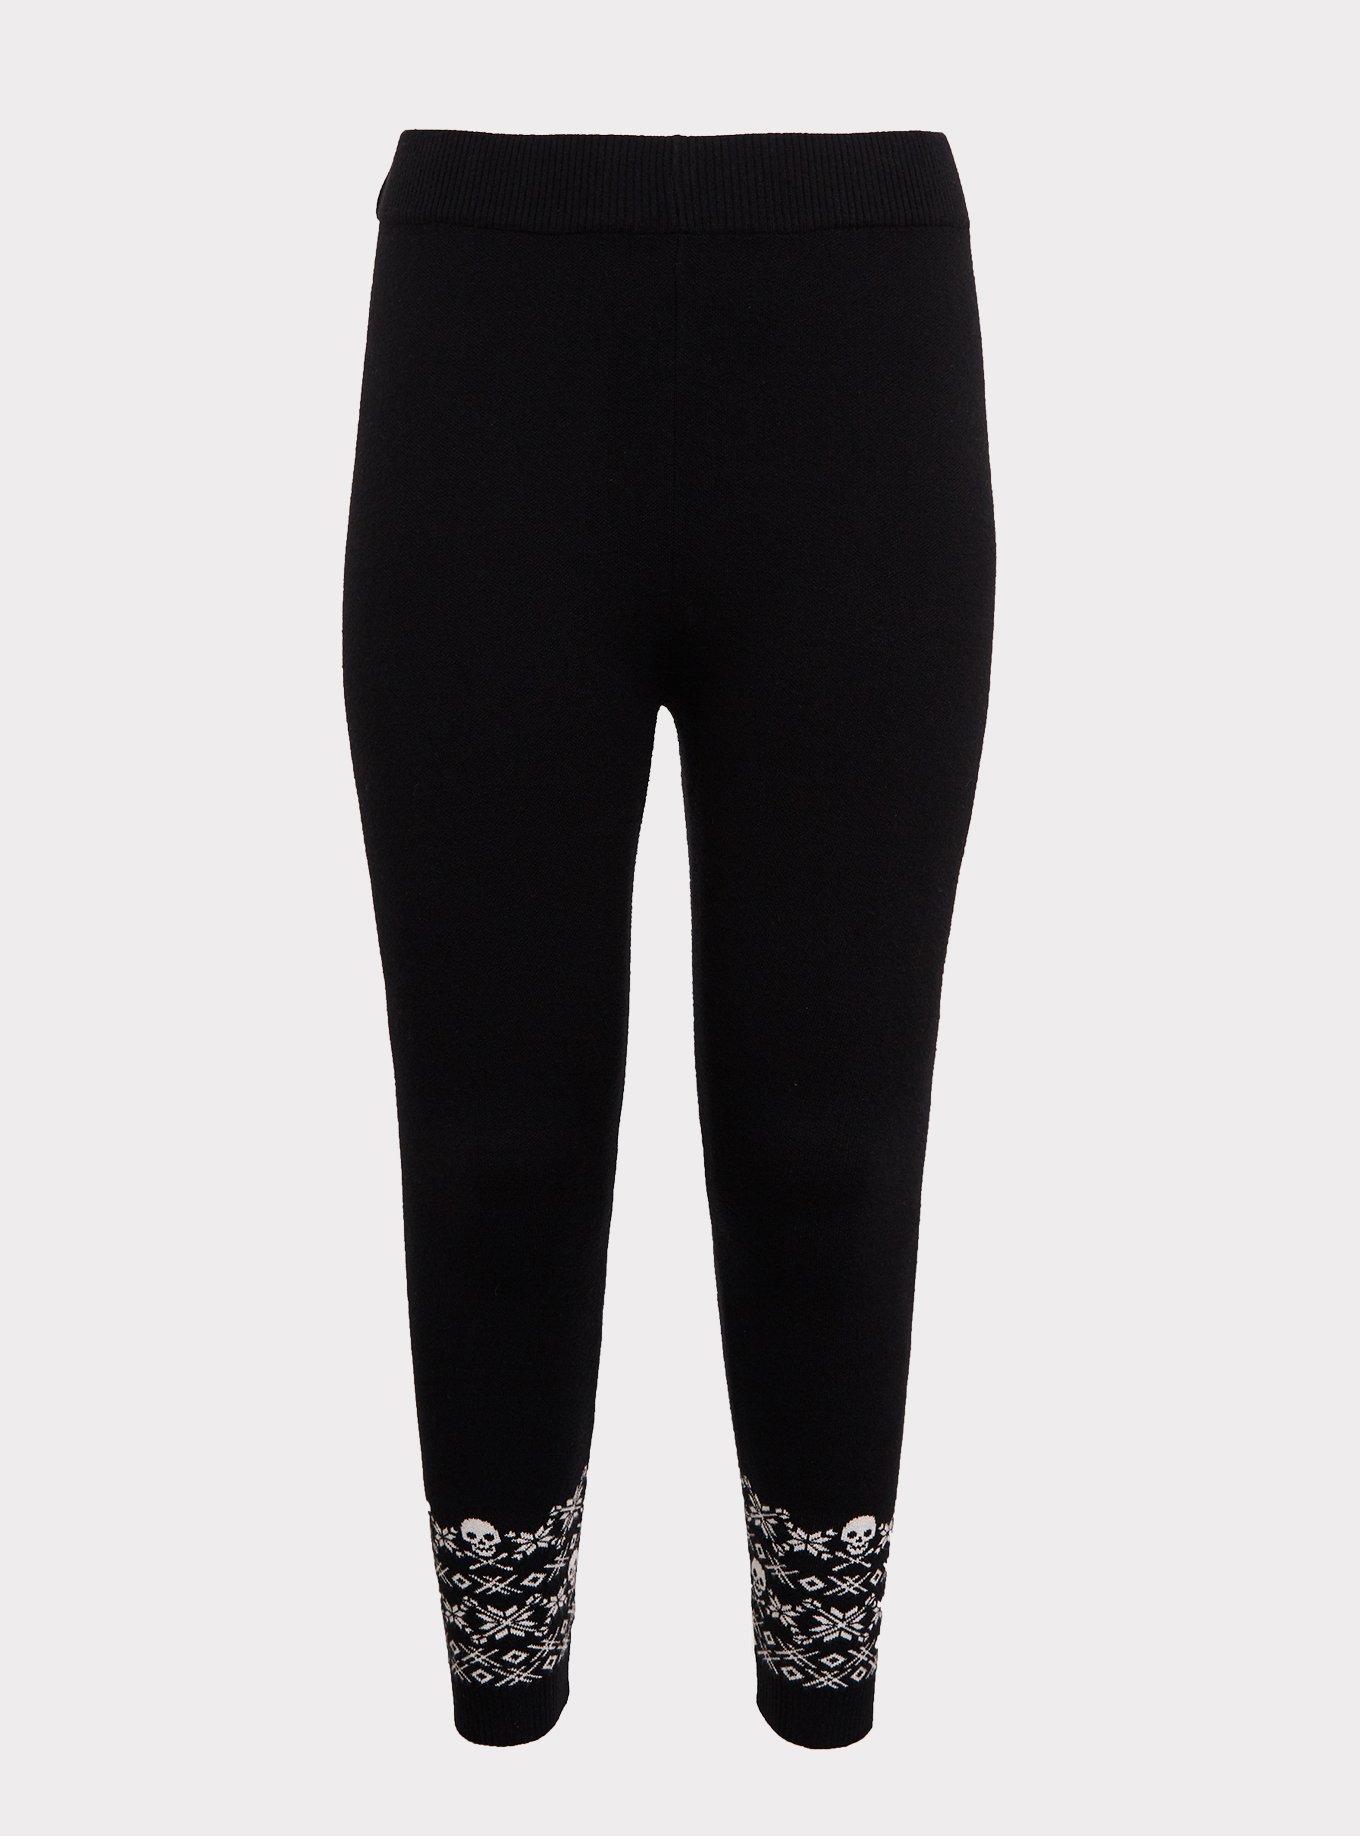 Plus Size - Sweater-Knit Legging – Fair Isle Skull Black & White